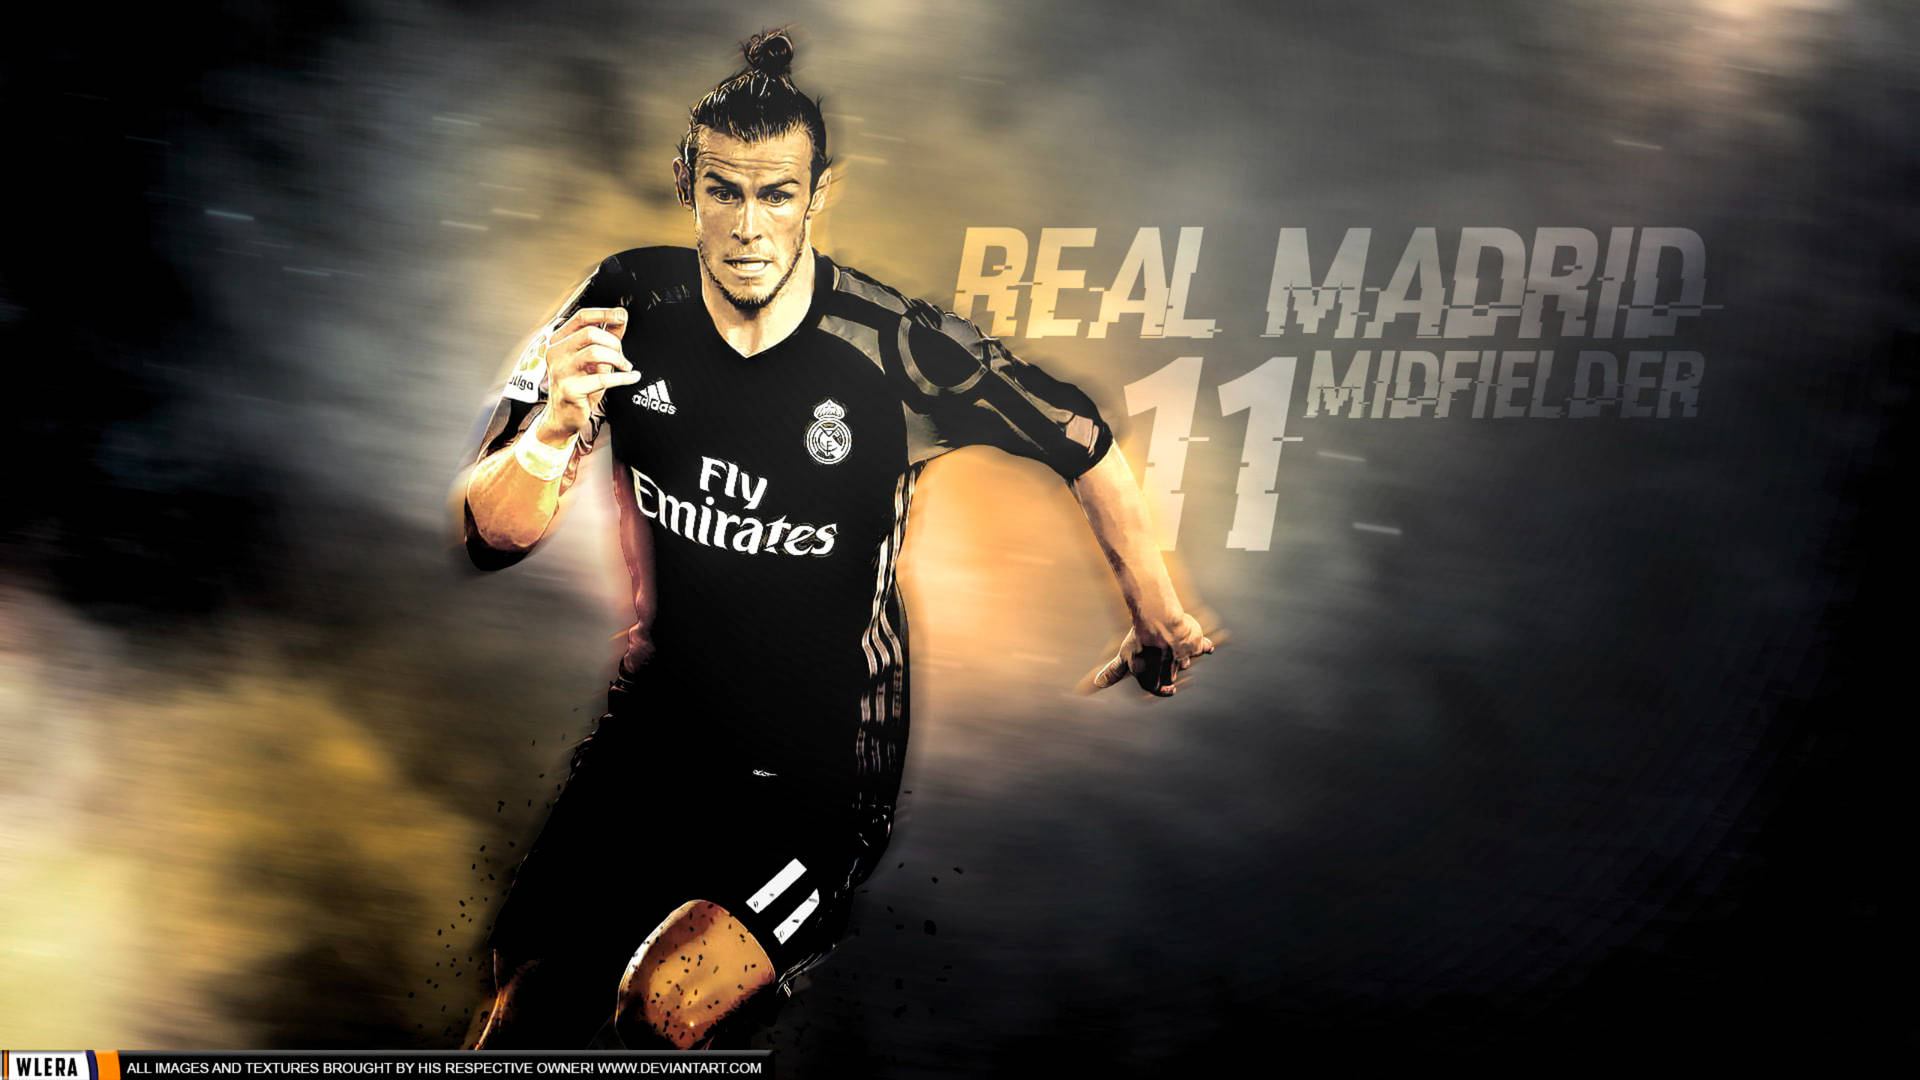 Garethbale Real Madrid Mittelfeldspieler Poster Wallpaper